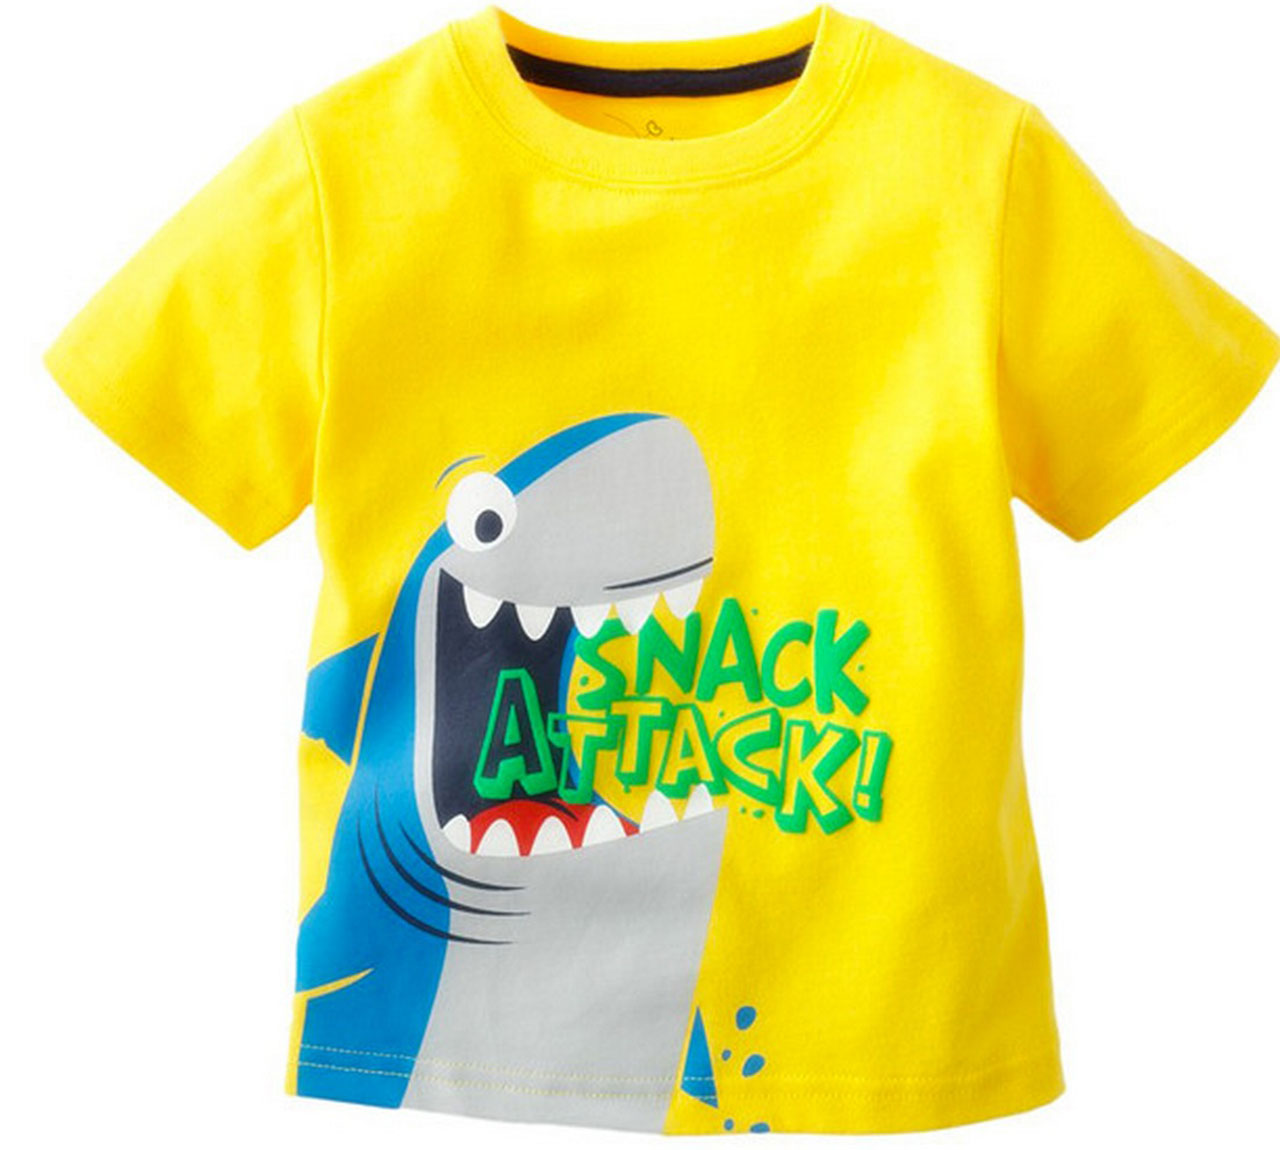 Snack Attack - Funsies Garments